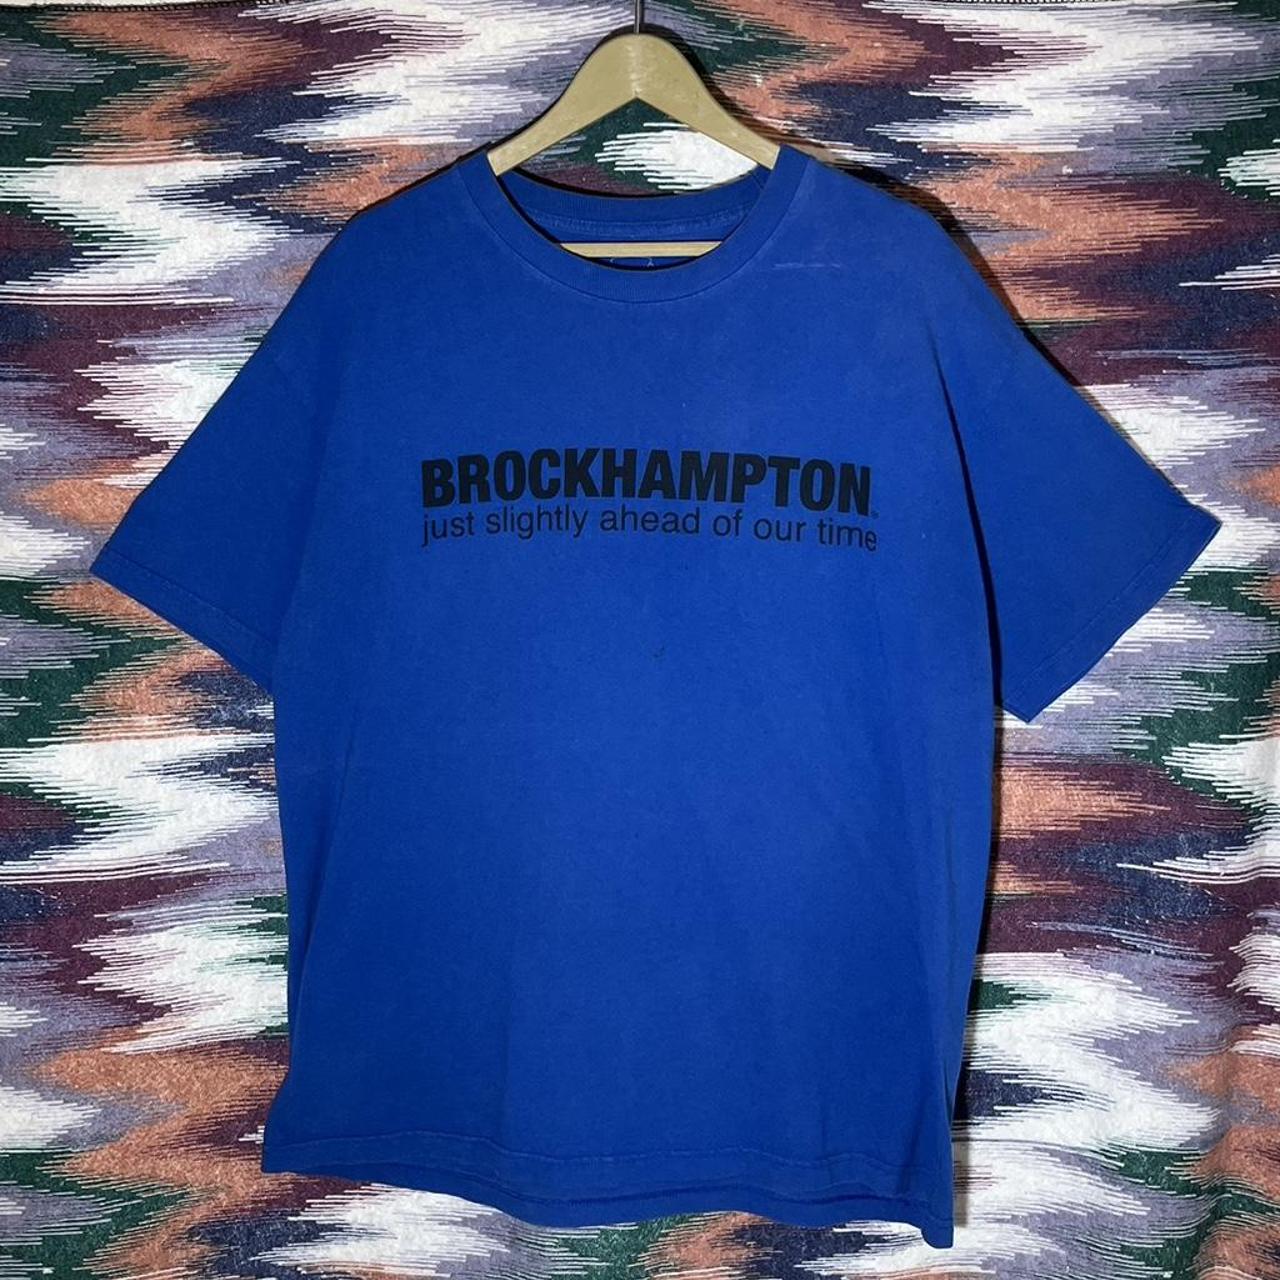 Brockhampton Men's Blue and Black T-shirt